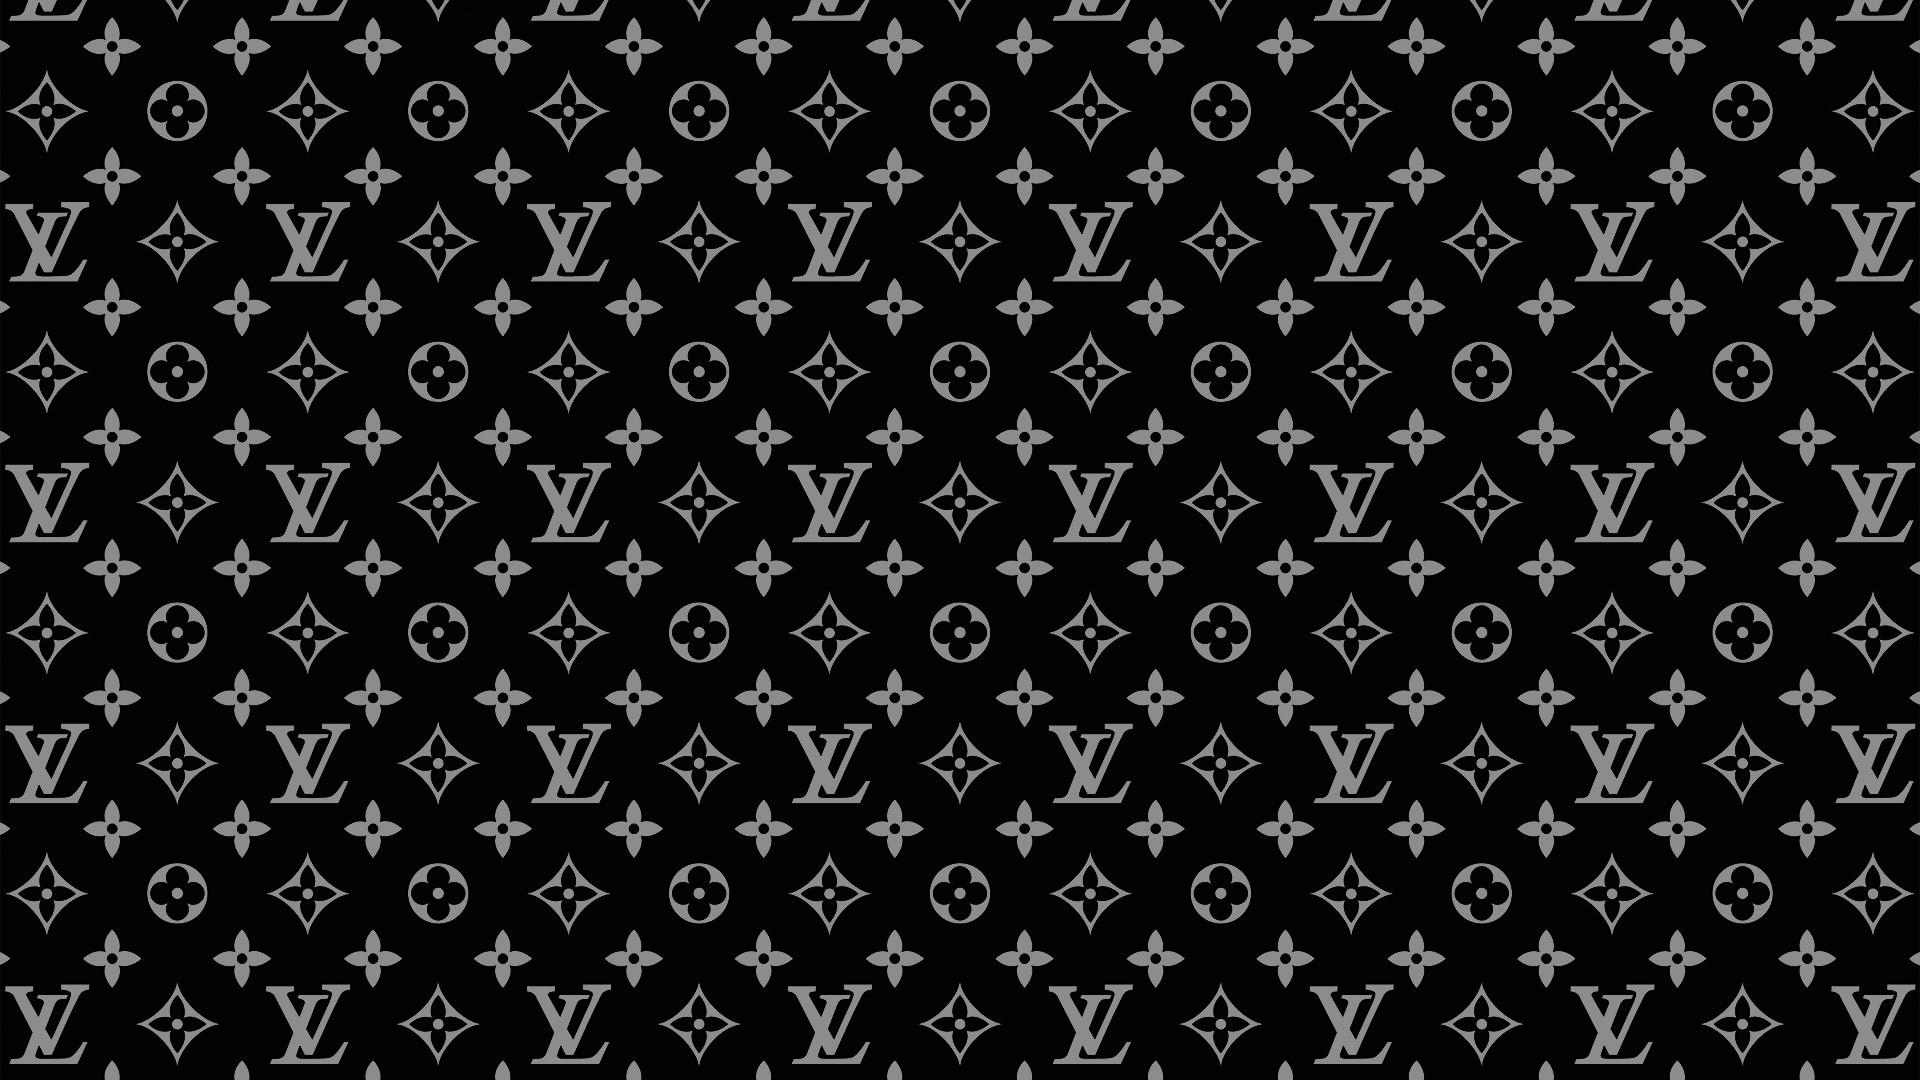 Black Louis Vuitton Desktop Wallpapers - Wallpaper Cave